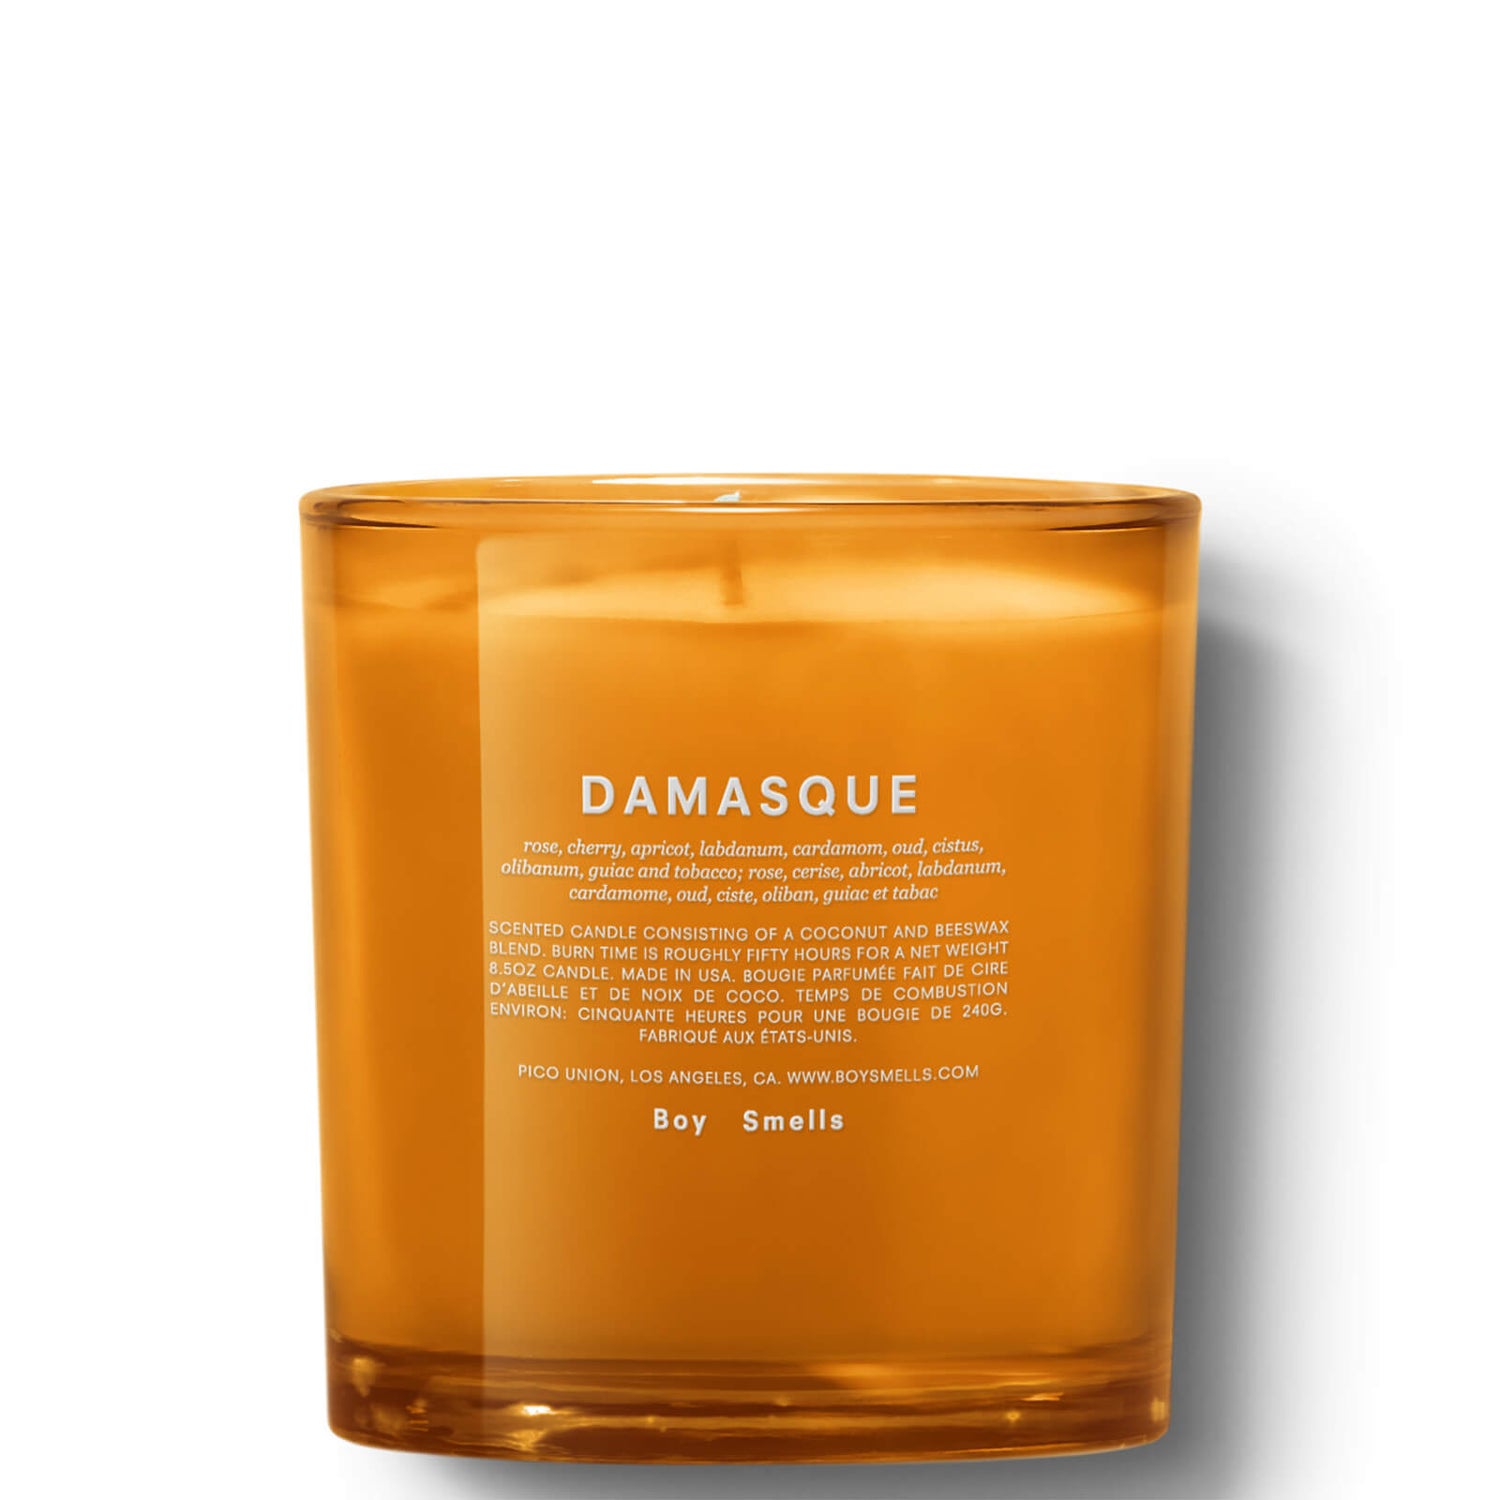 Boy Smells Damasque Candle 250g